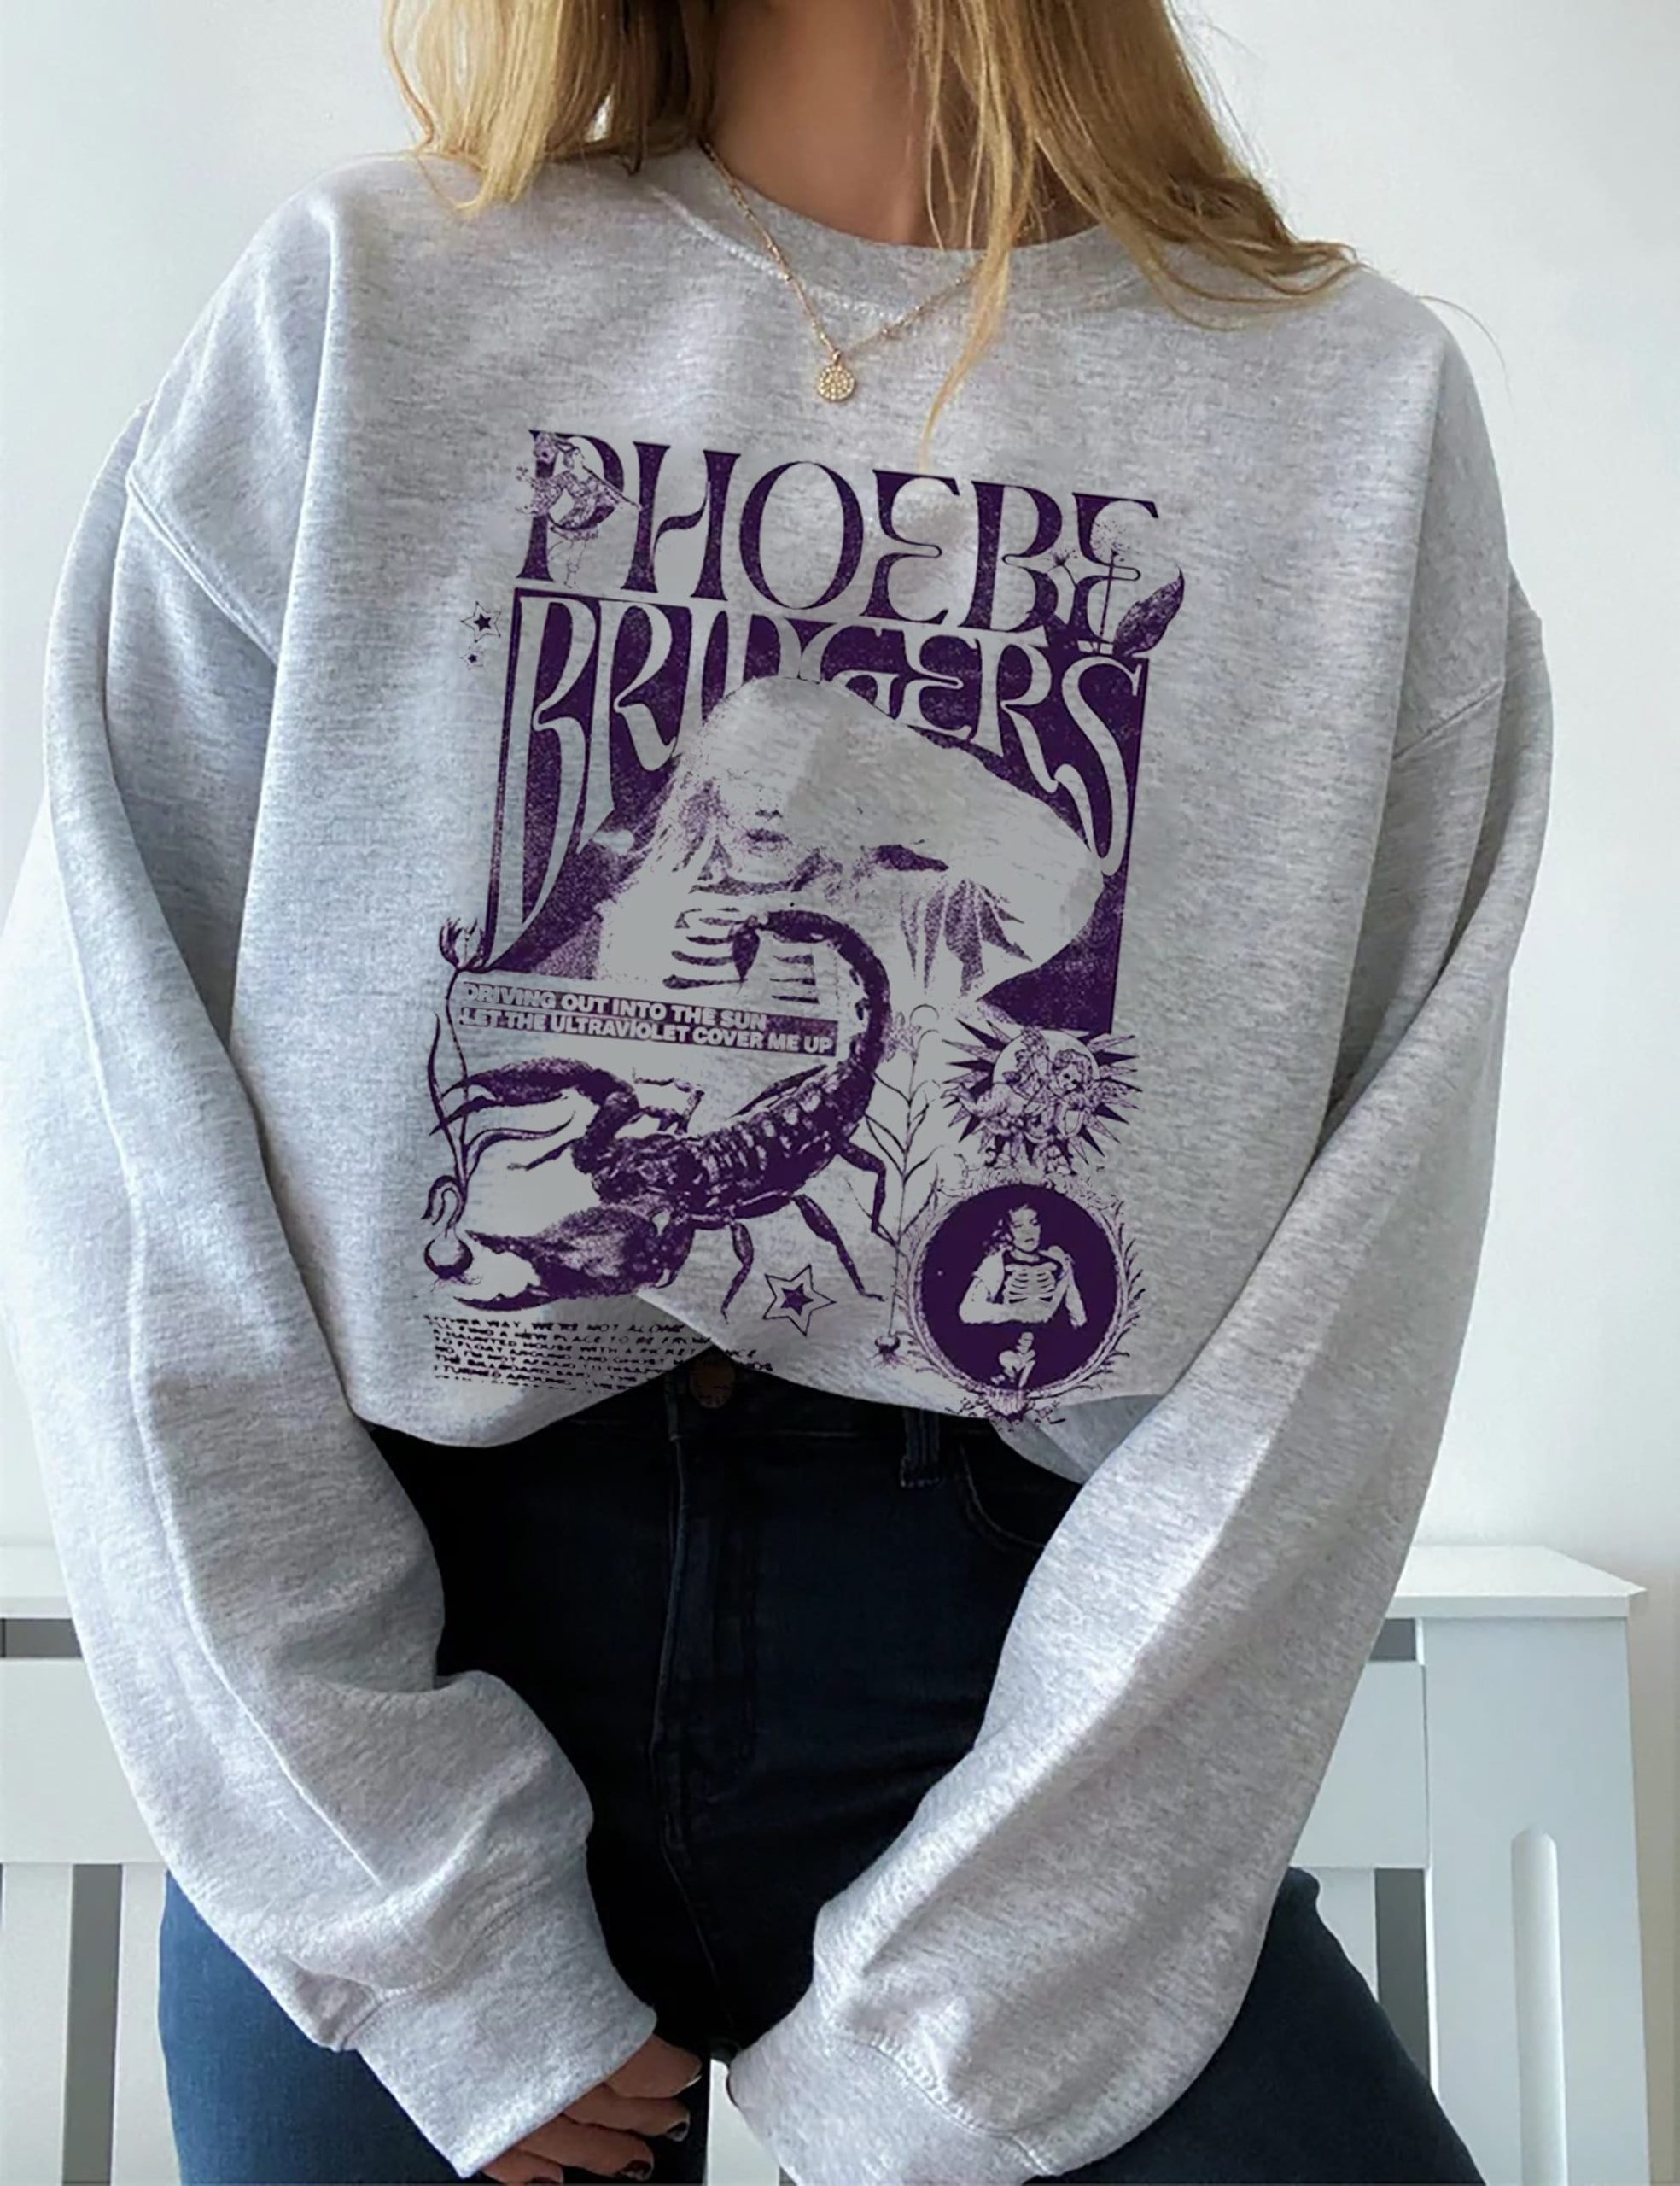 Vintage Phoebe Bridgers Reunion Tour 2022 Unisex Sweatshirt